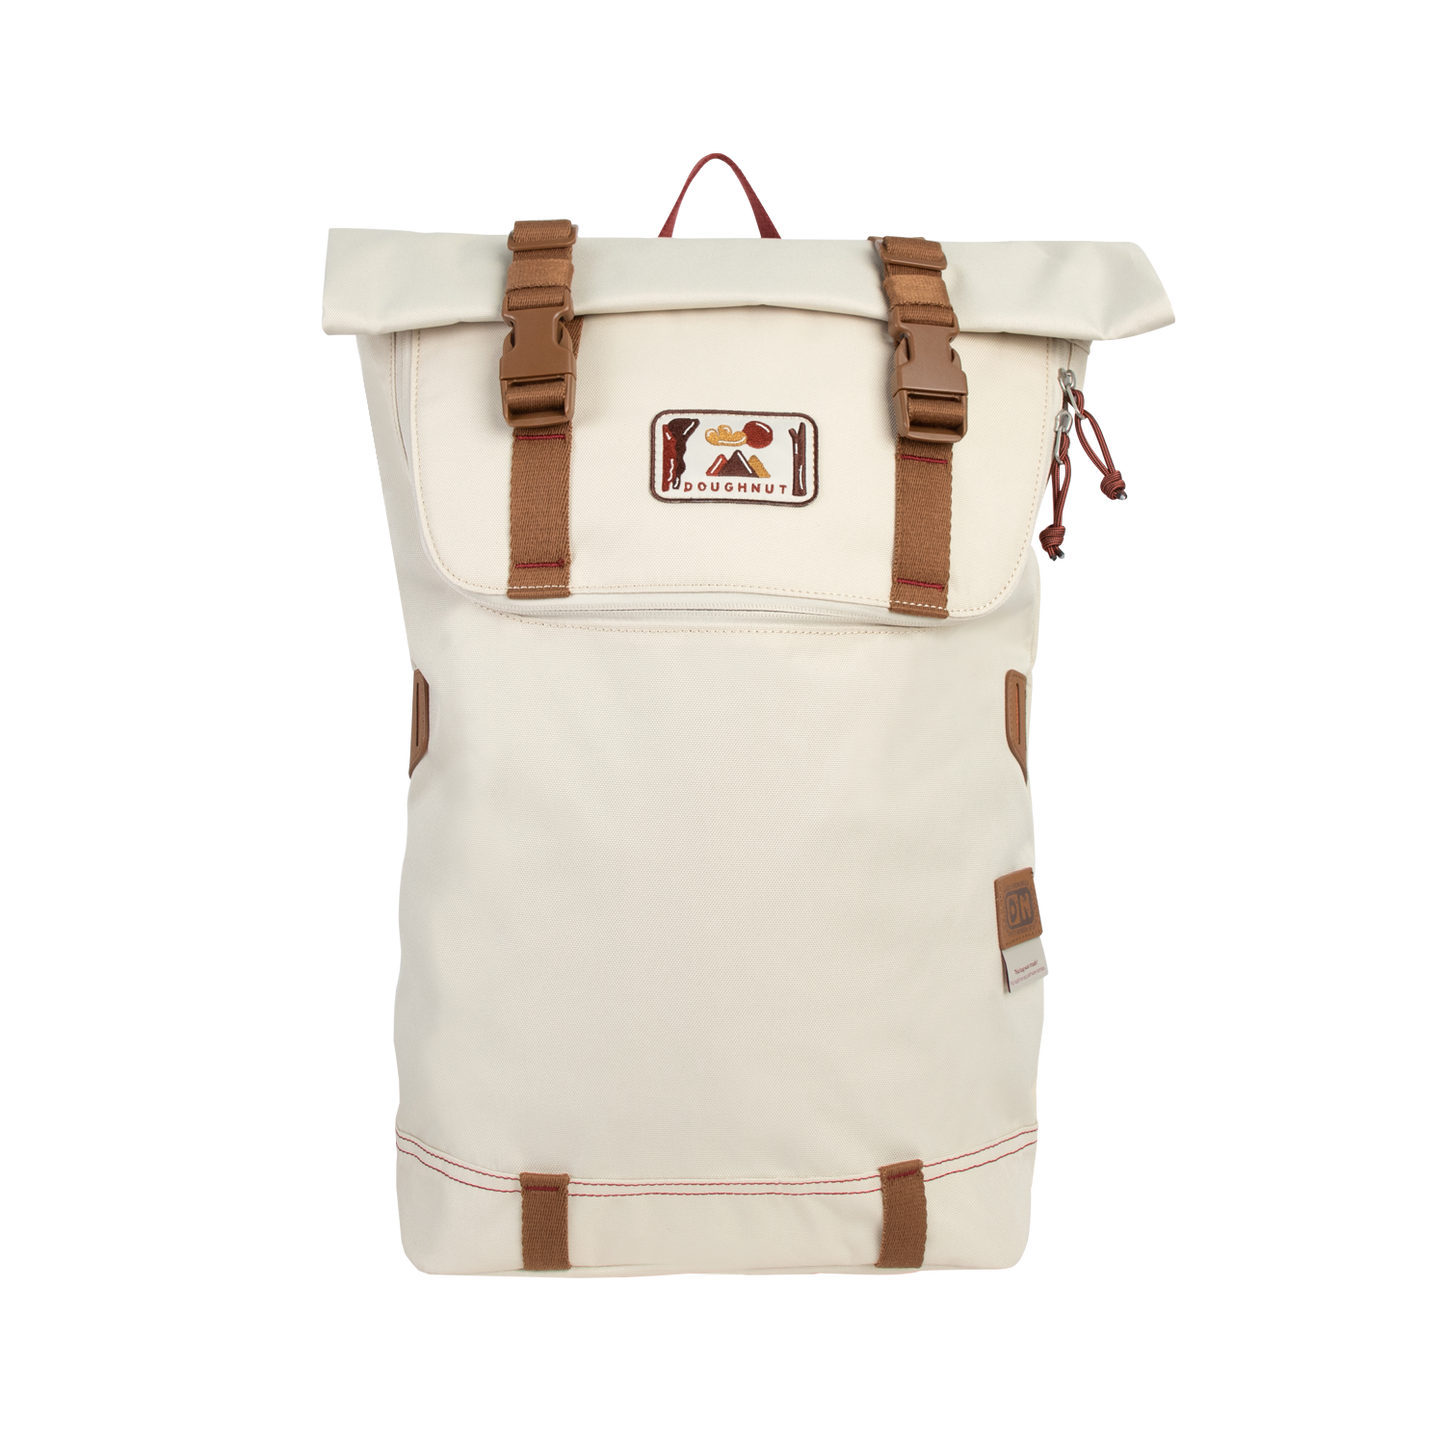 Christopher Dreamwalker Series Backpack